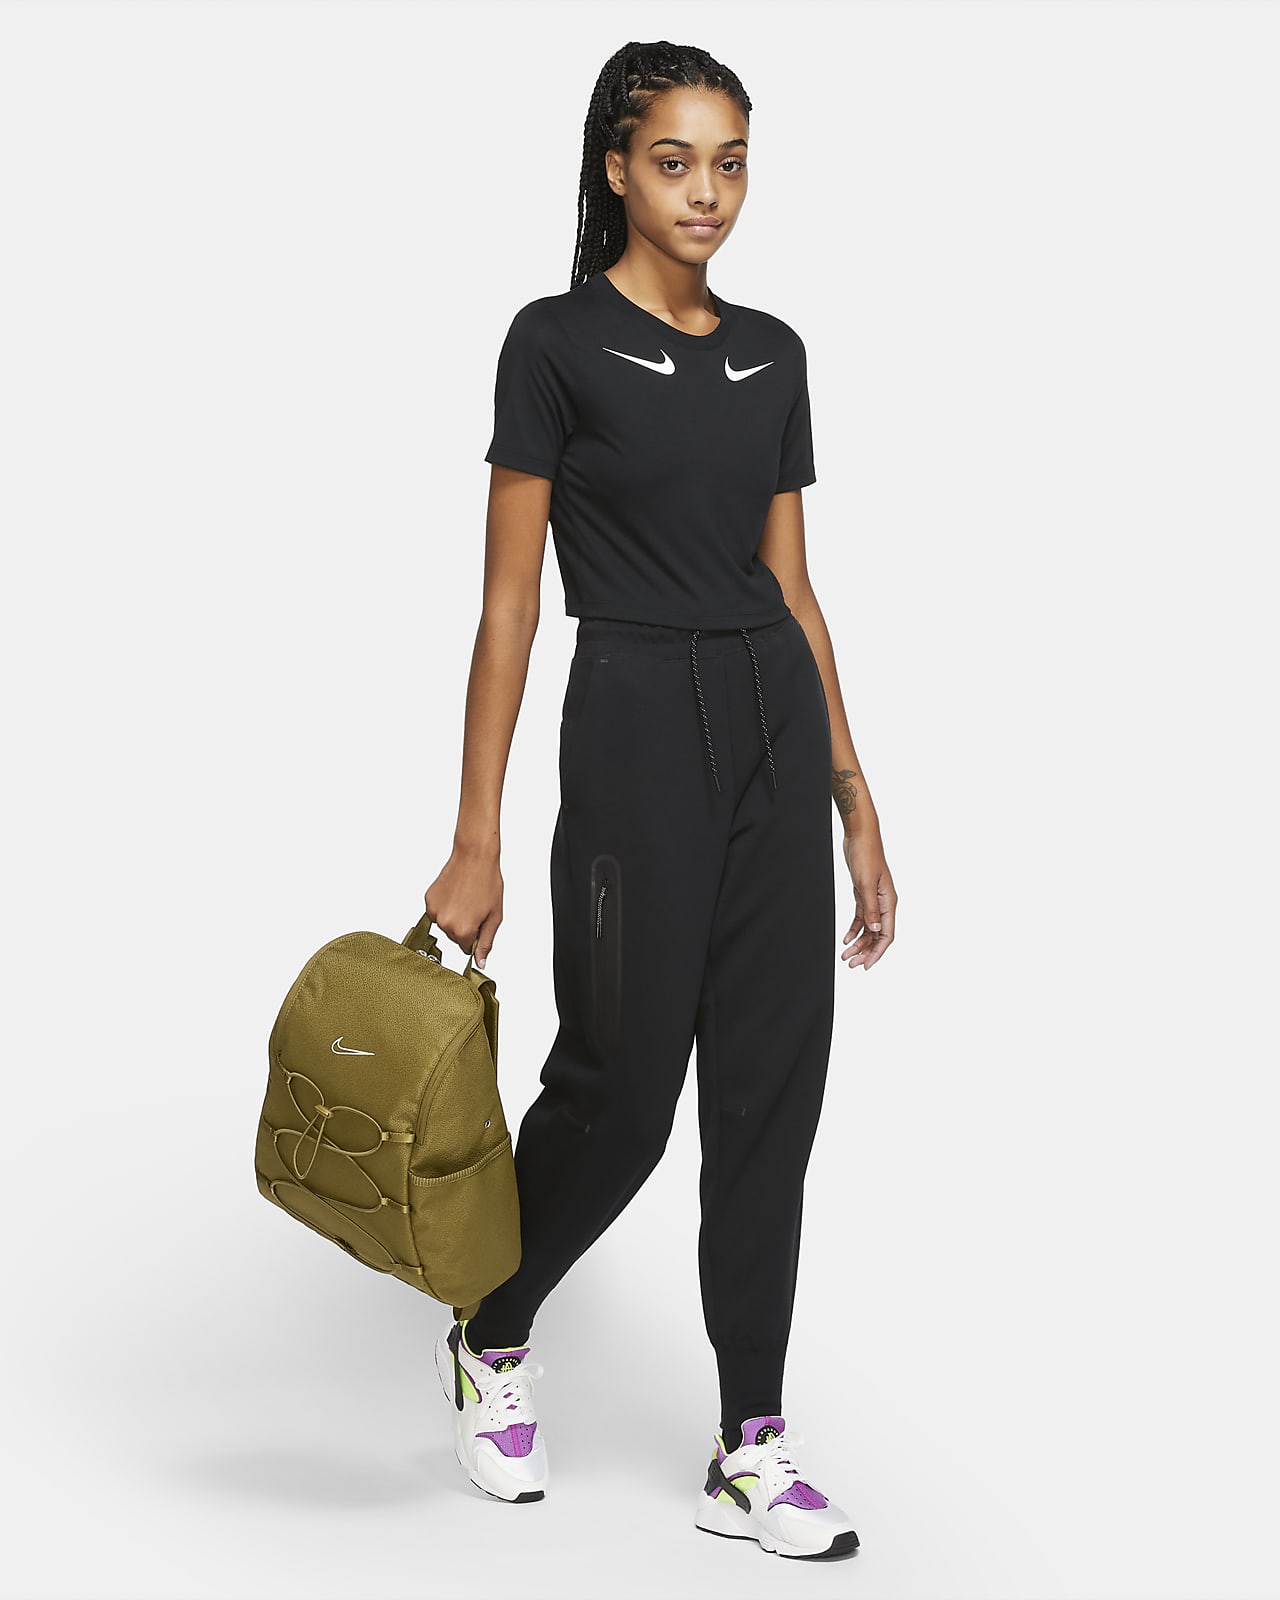 Nike One Training Bag